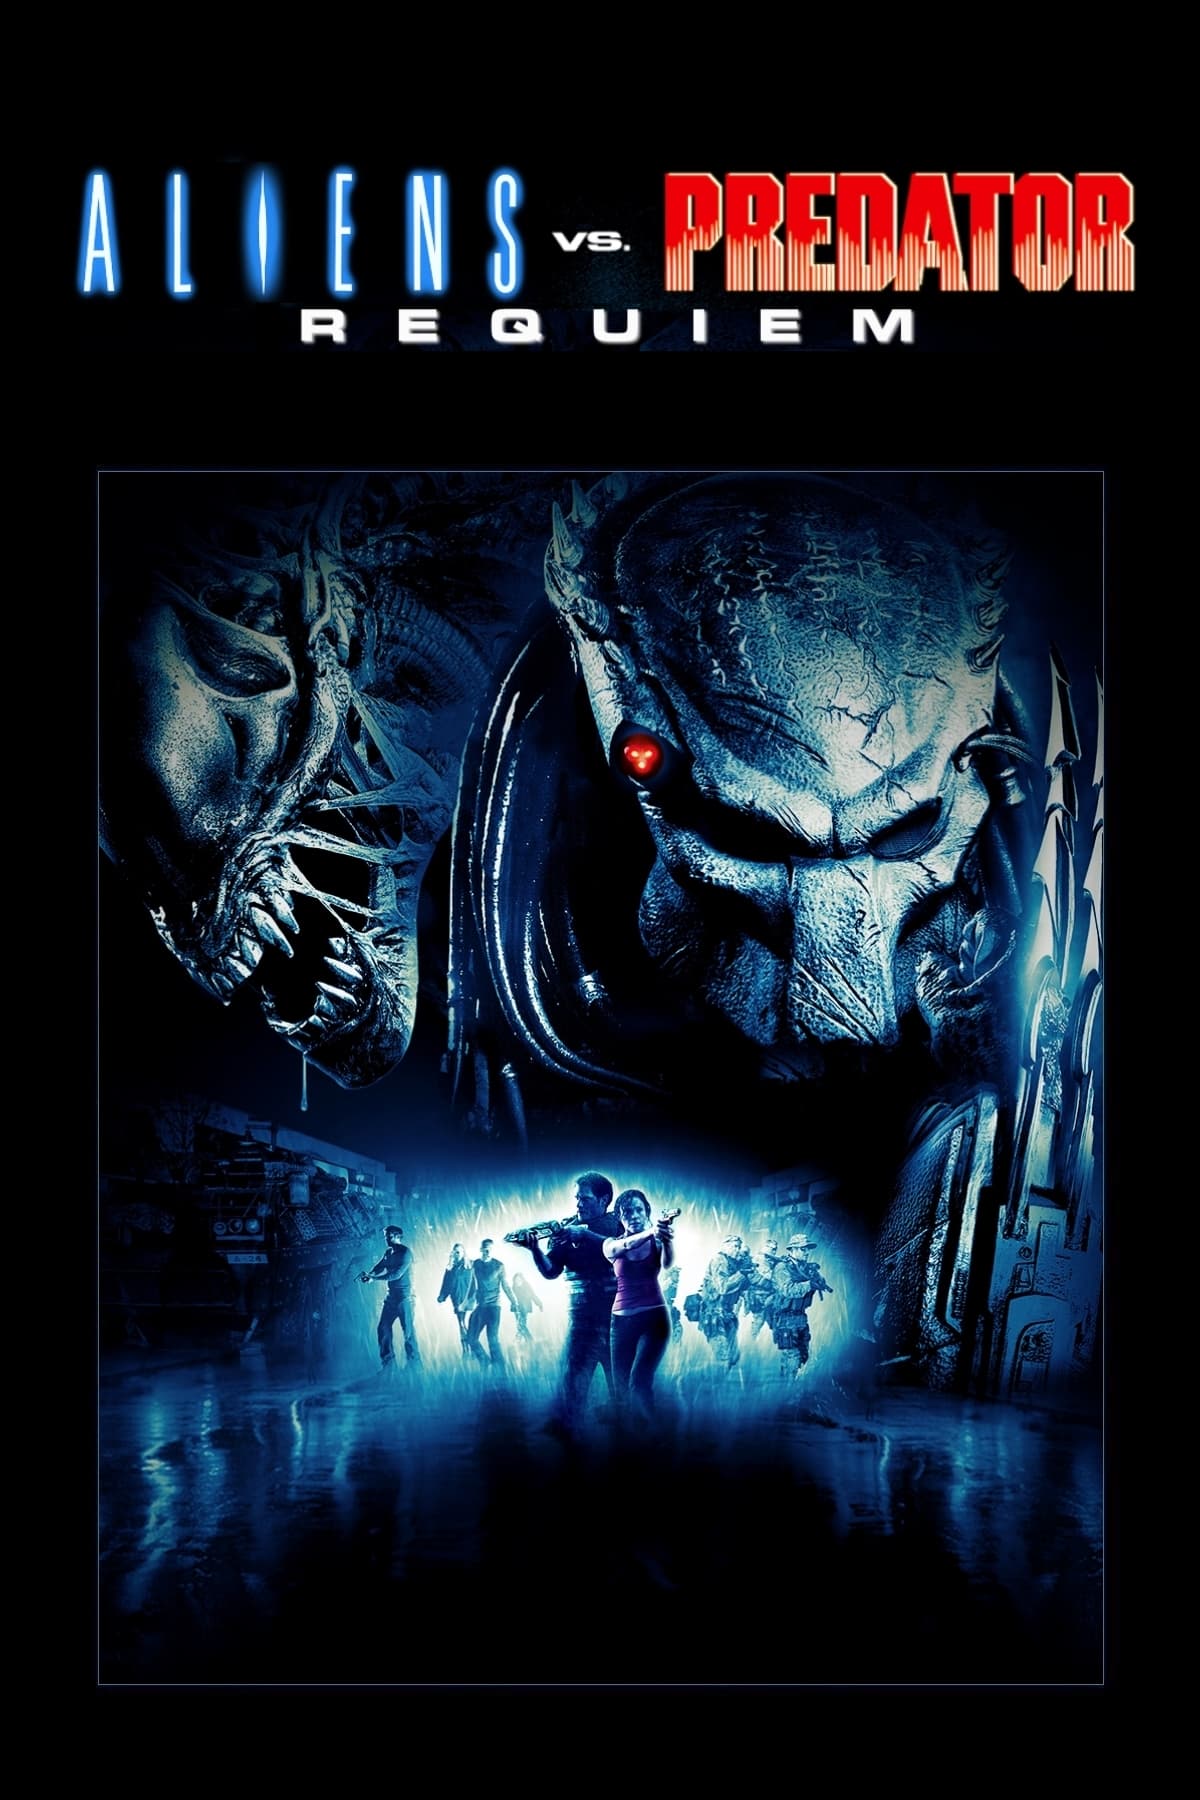 Aliens vs Predator: Requiem - Finding the Good in 2007's Mashup